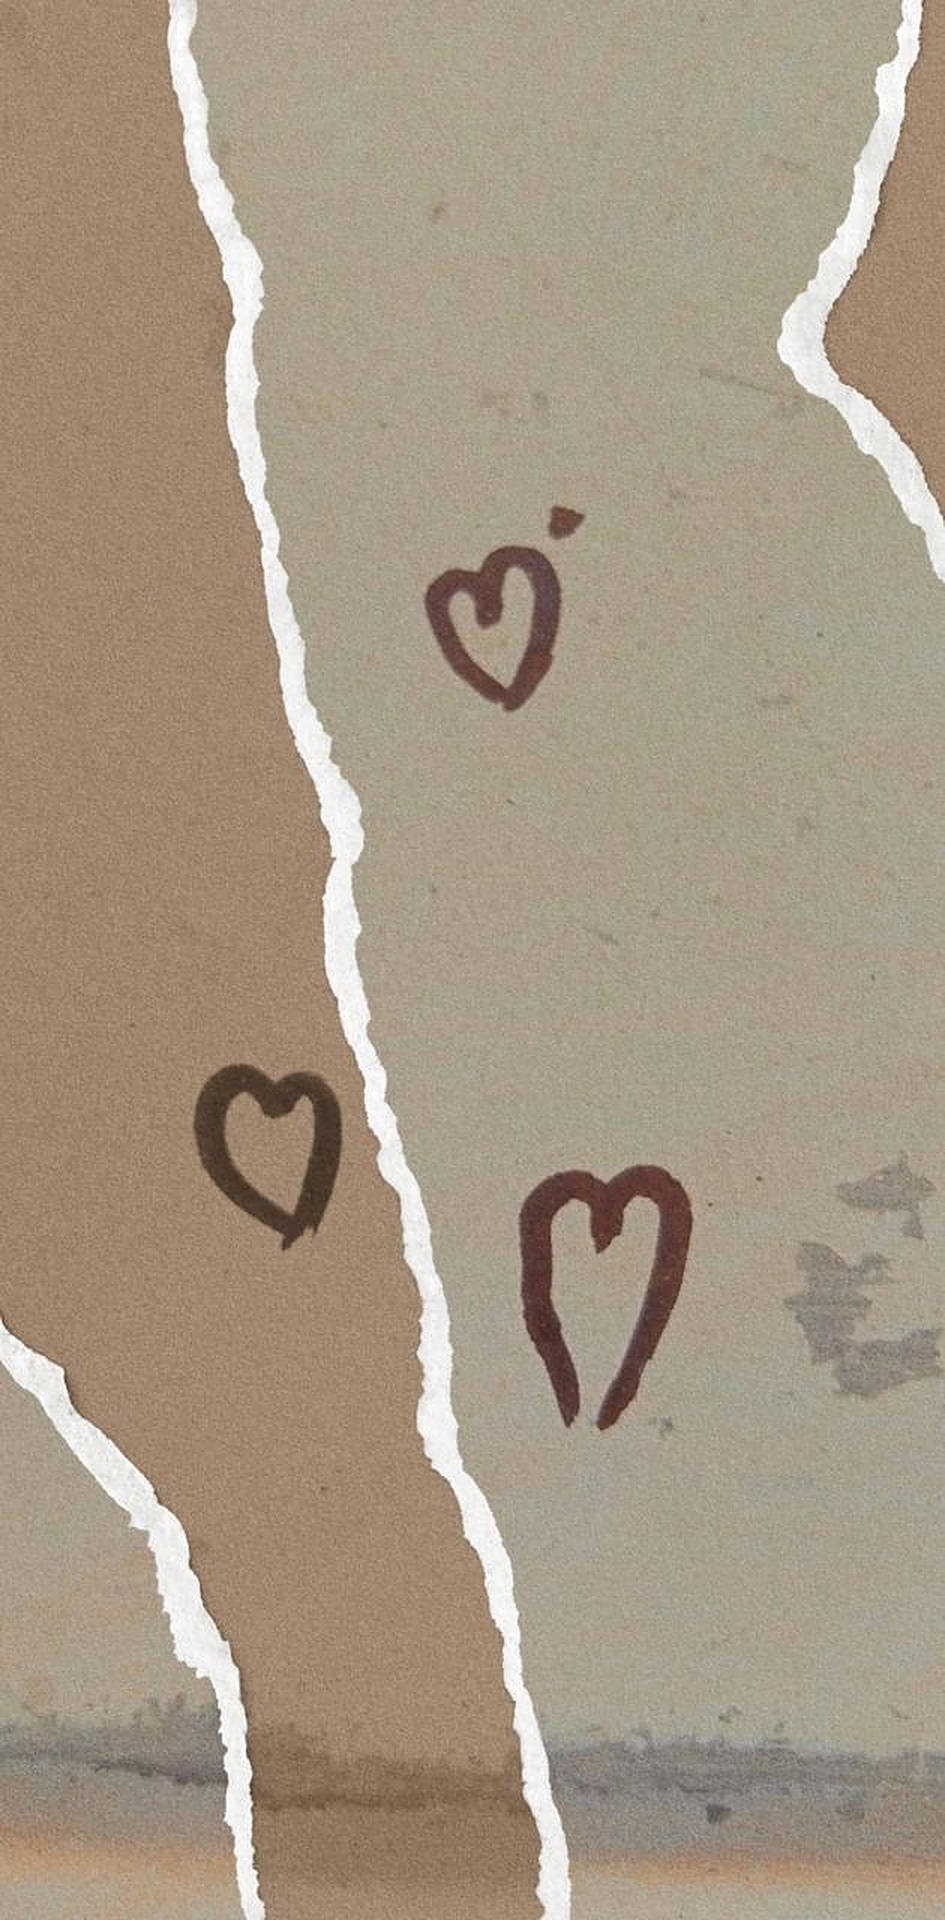 Brown Paper Heart Doodles Background